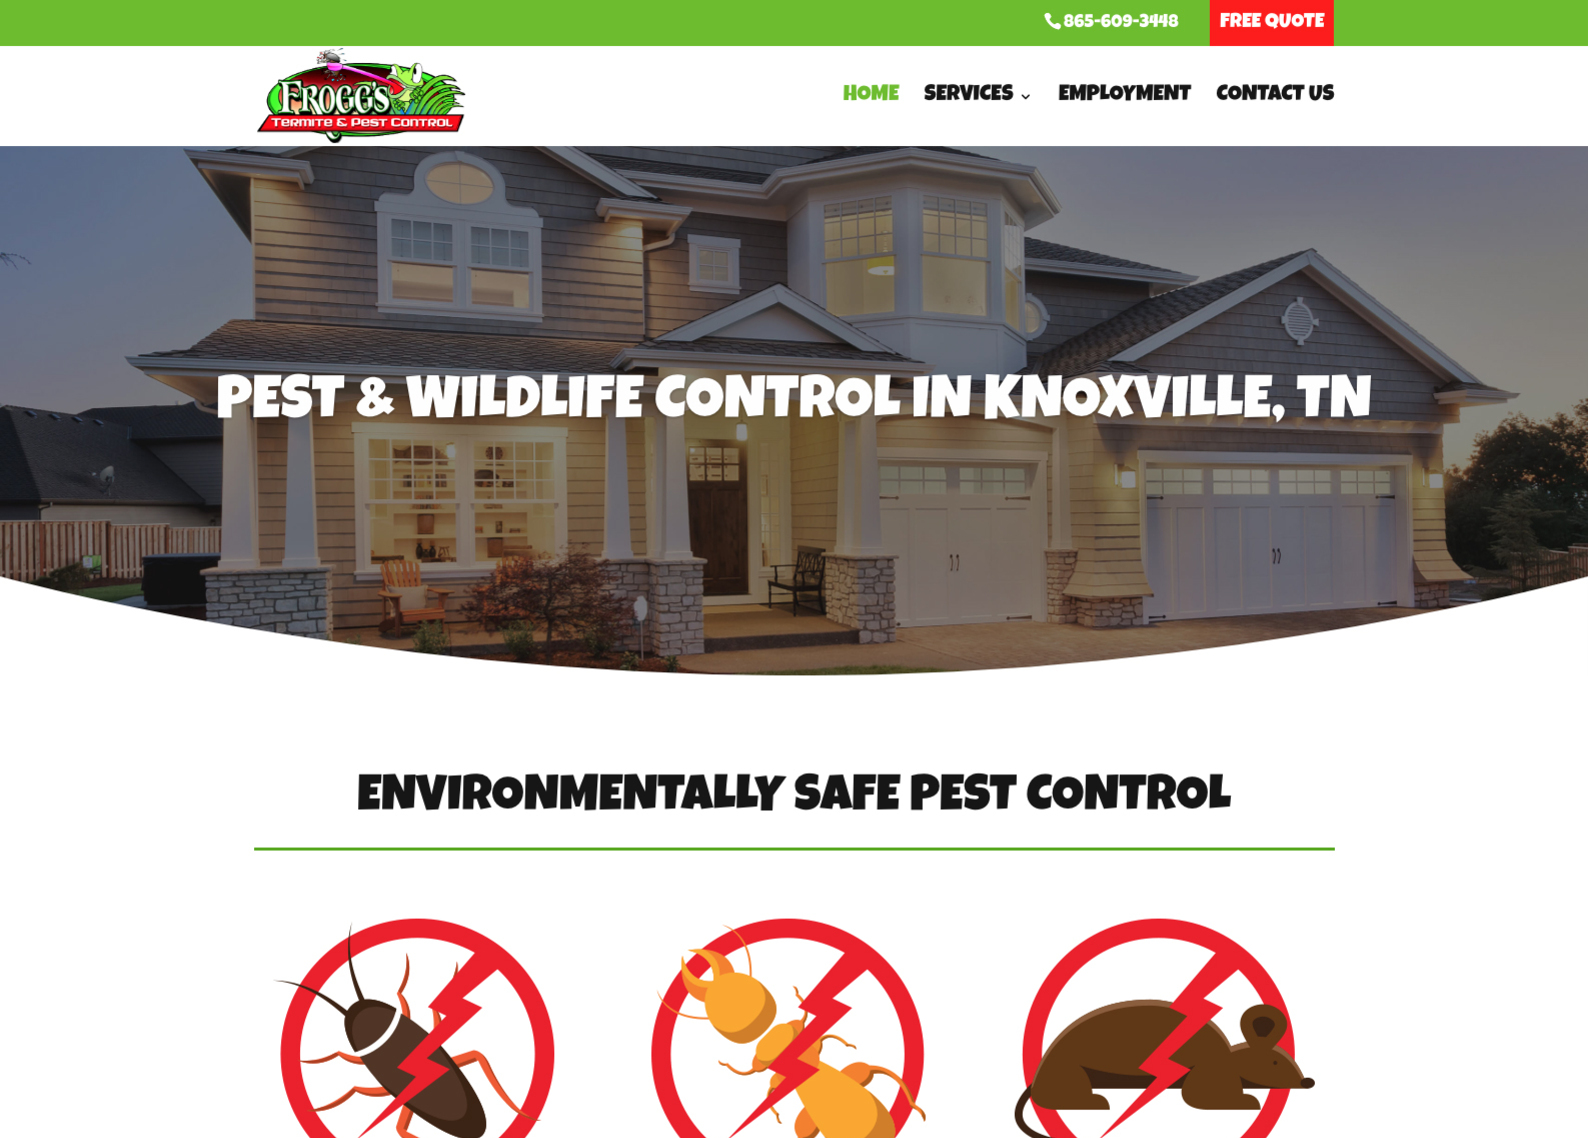 Frogg’s Termite & Pest Control